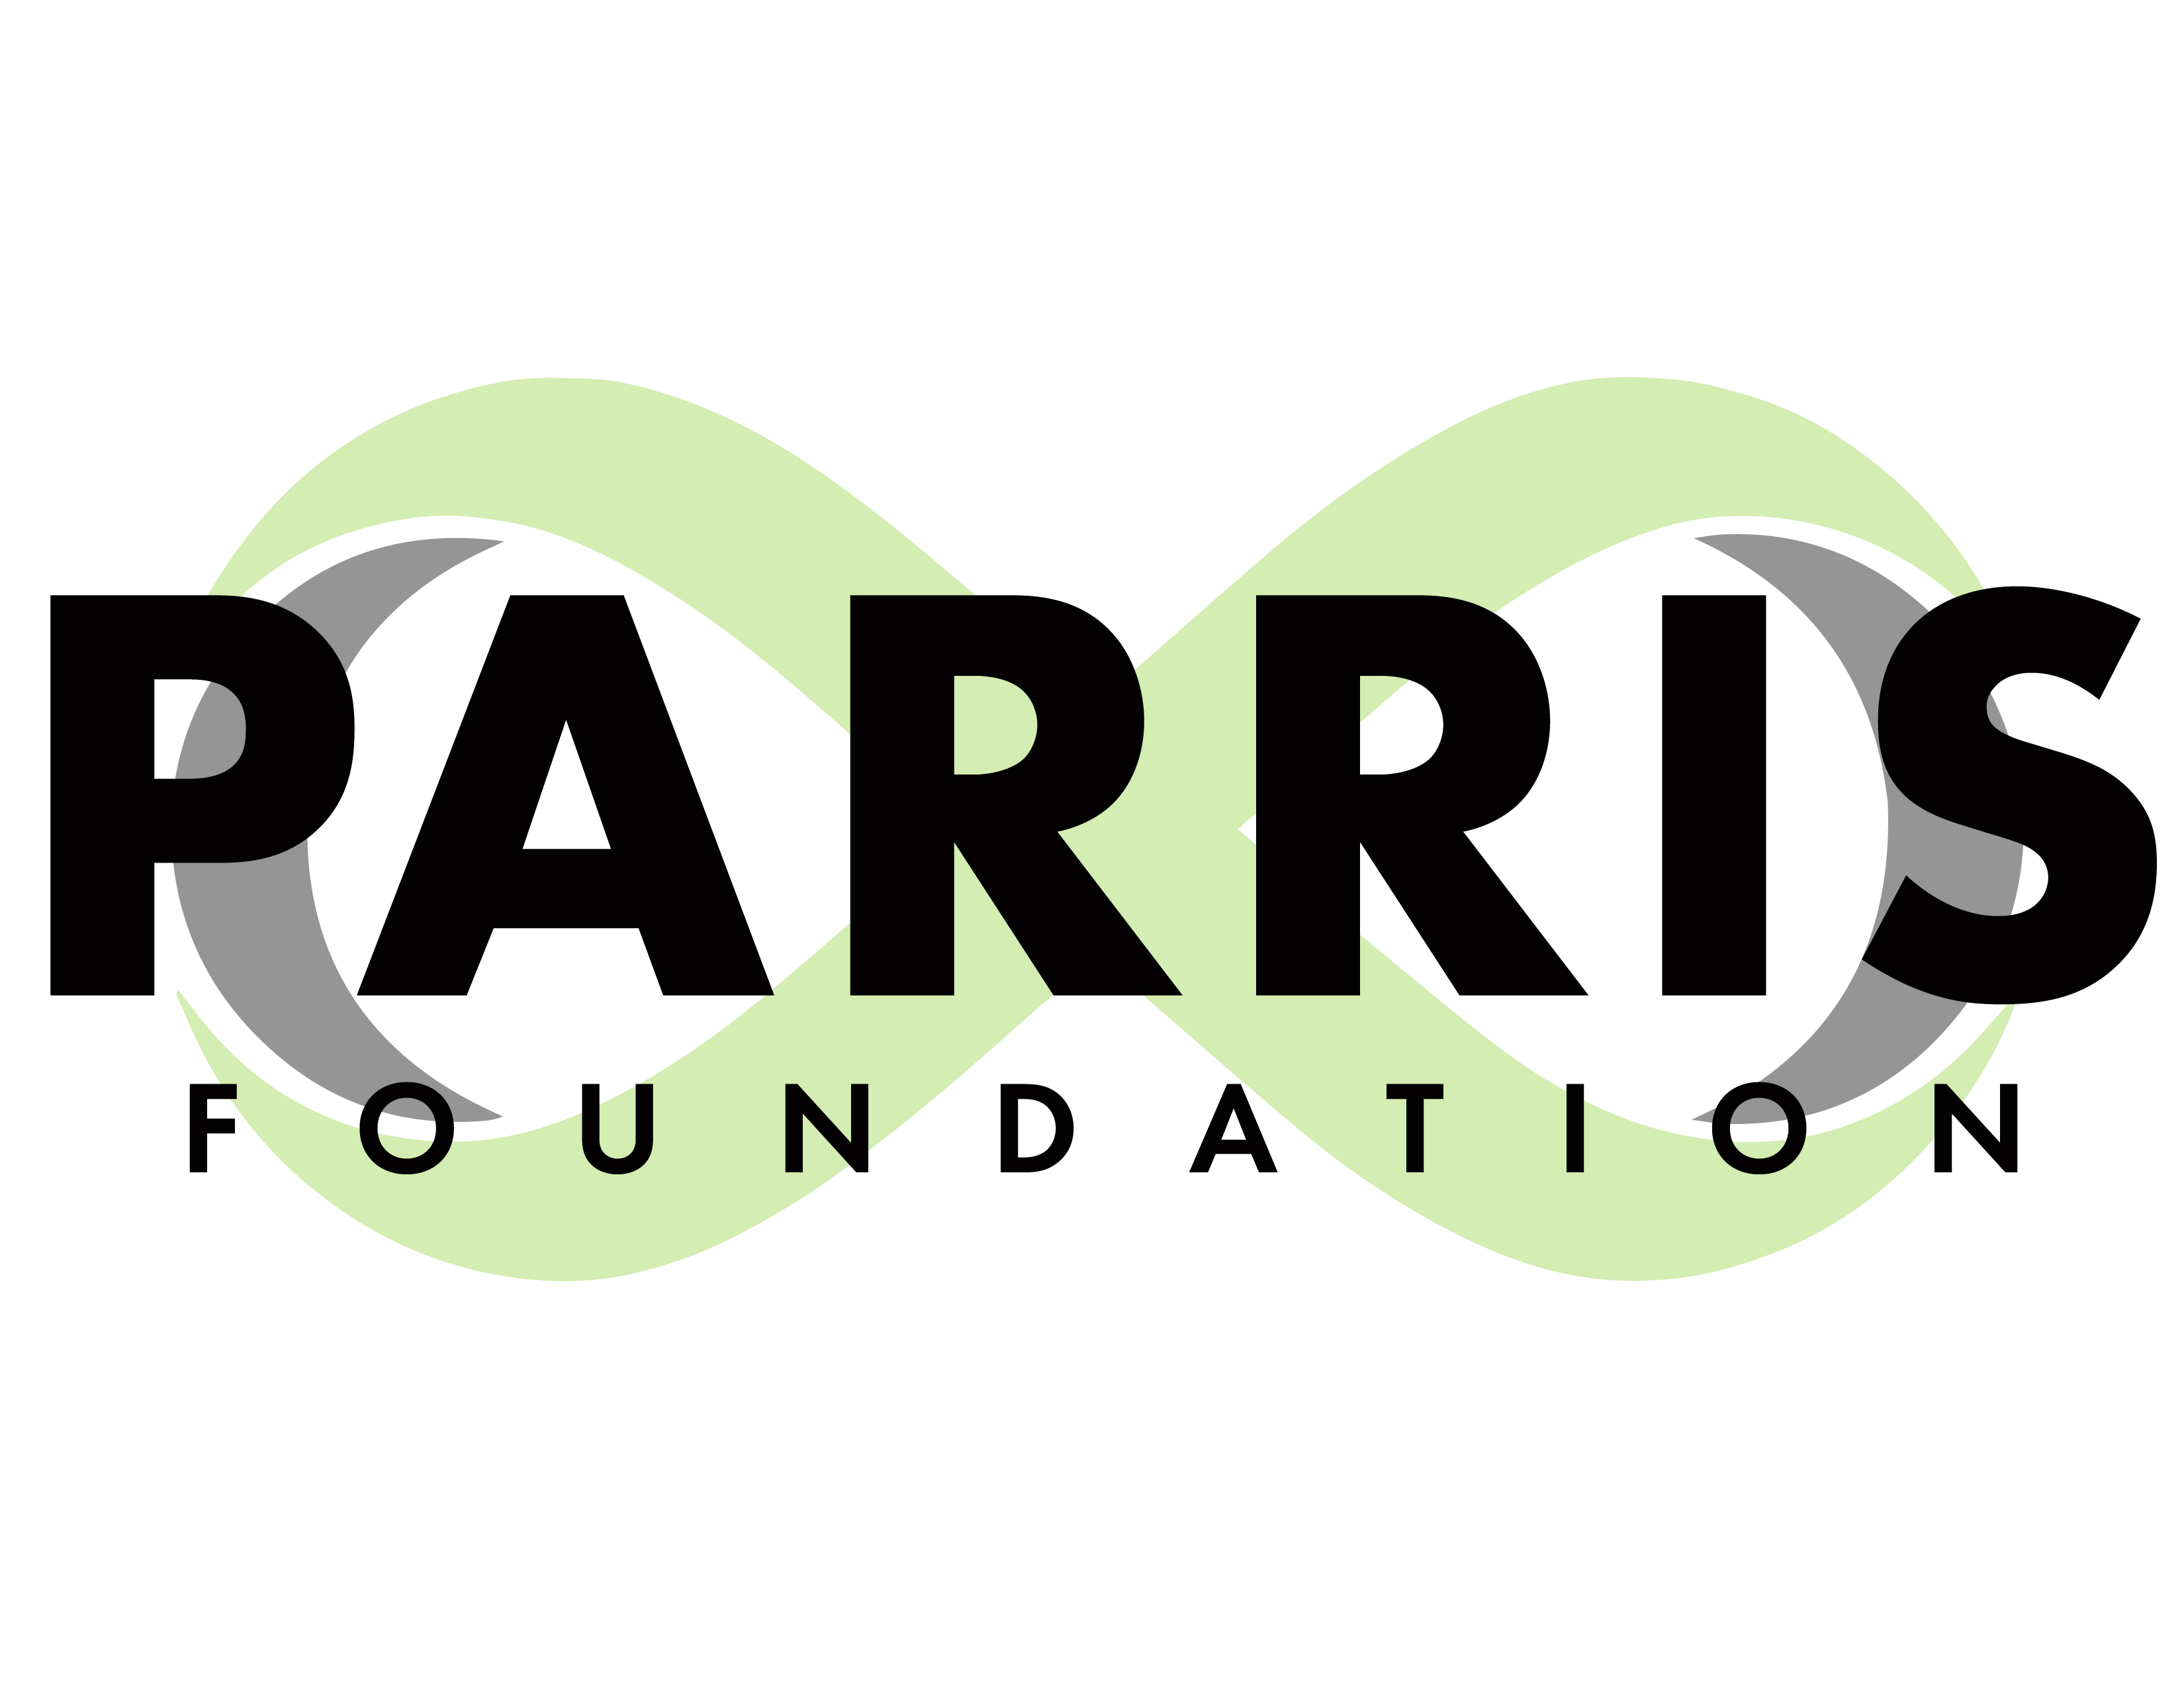 The Parris Foundation logo